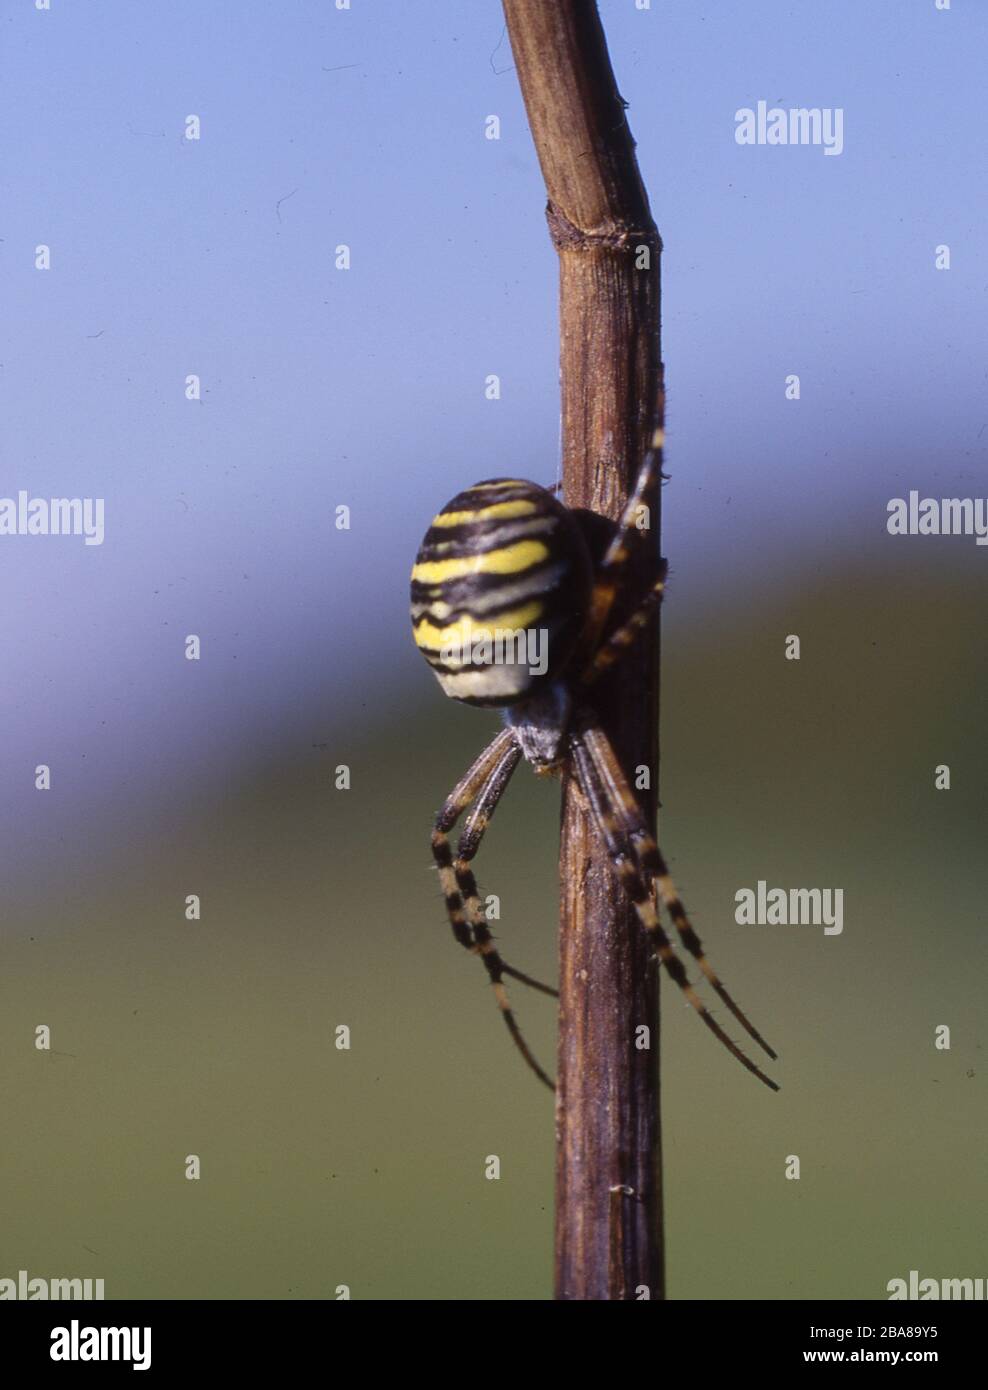 Wespenspinne sitzt auf Grashalm Stock Photo